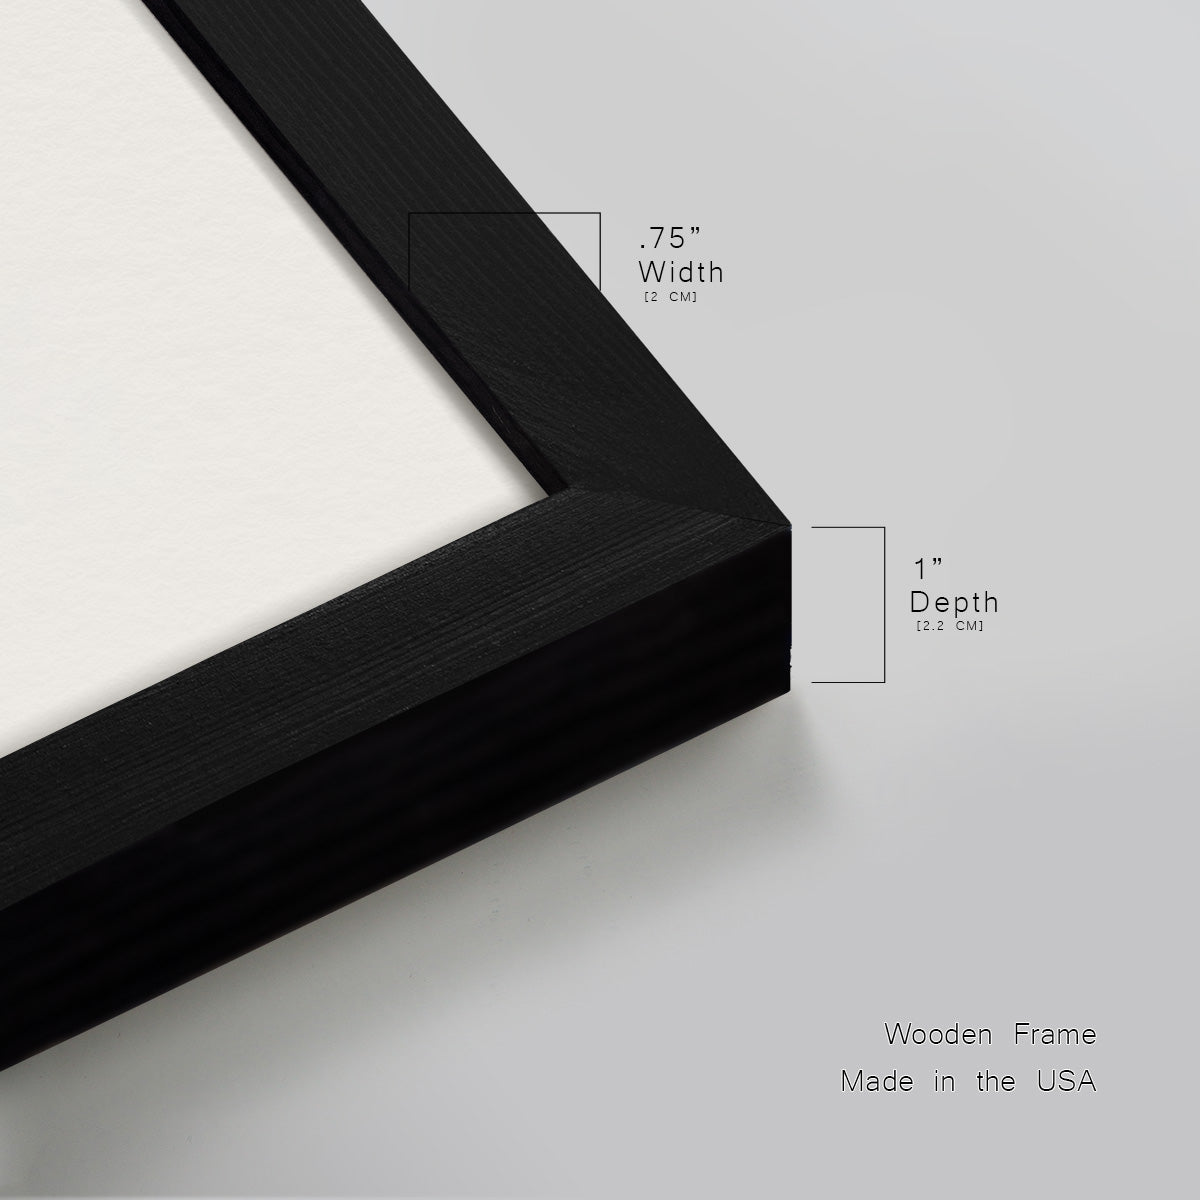 Celestial Glimmer- Premium Framed Print Double Matboard